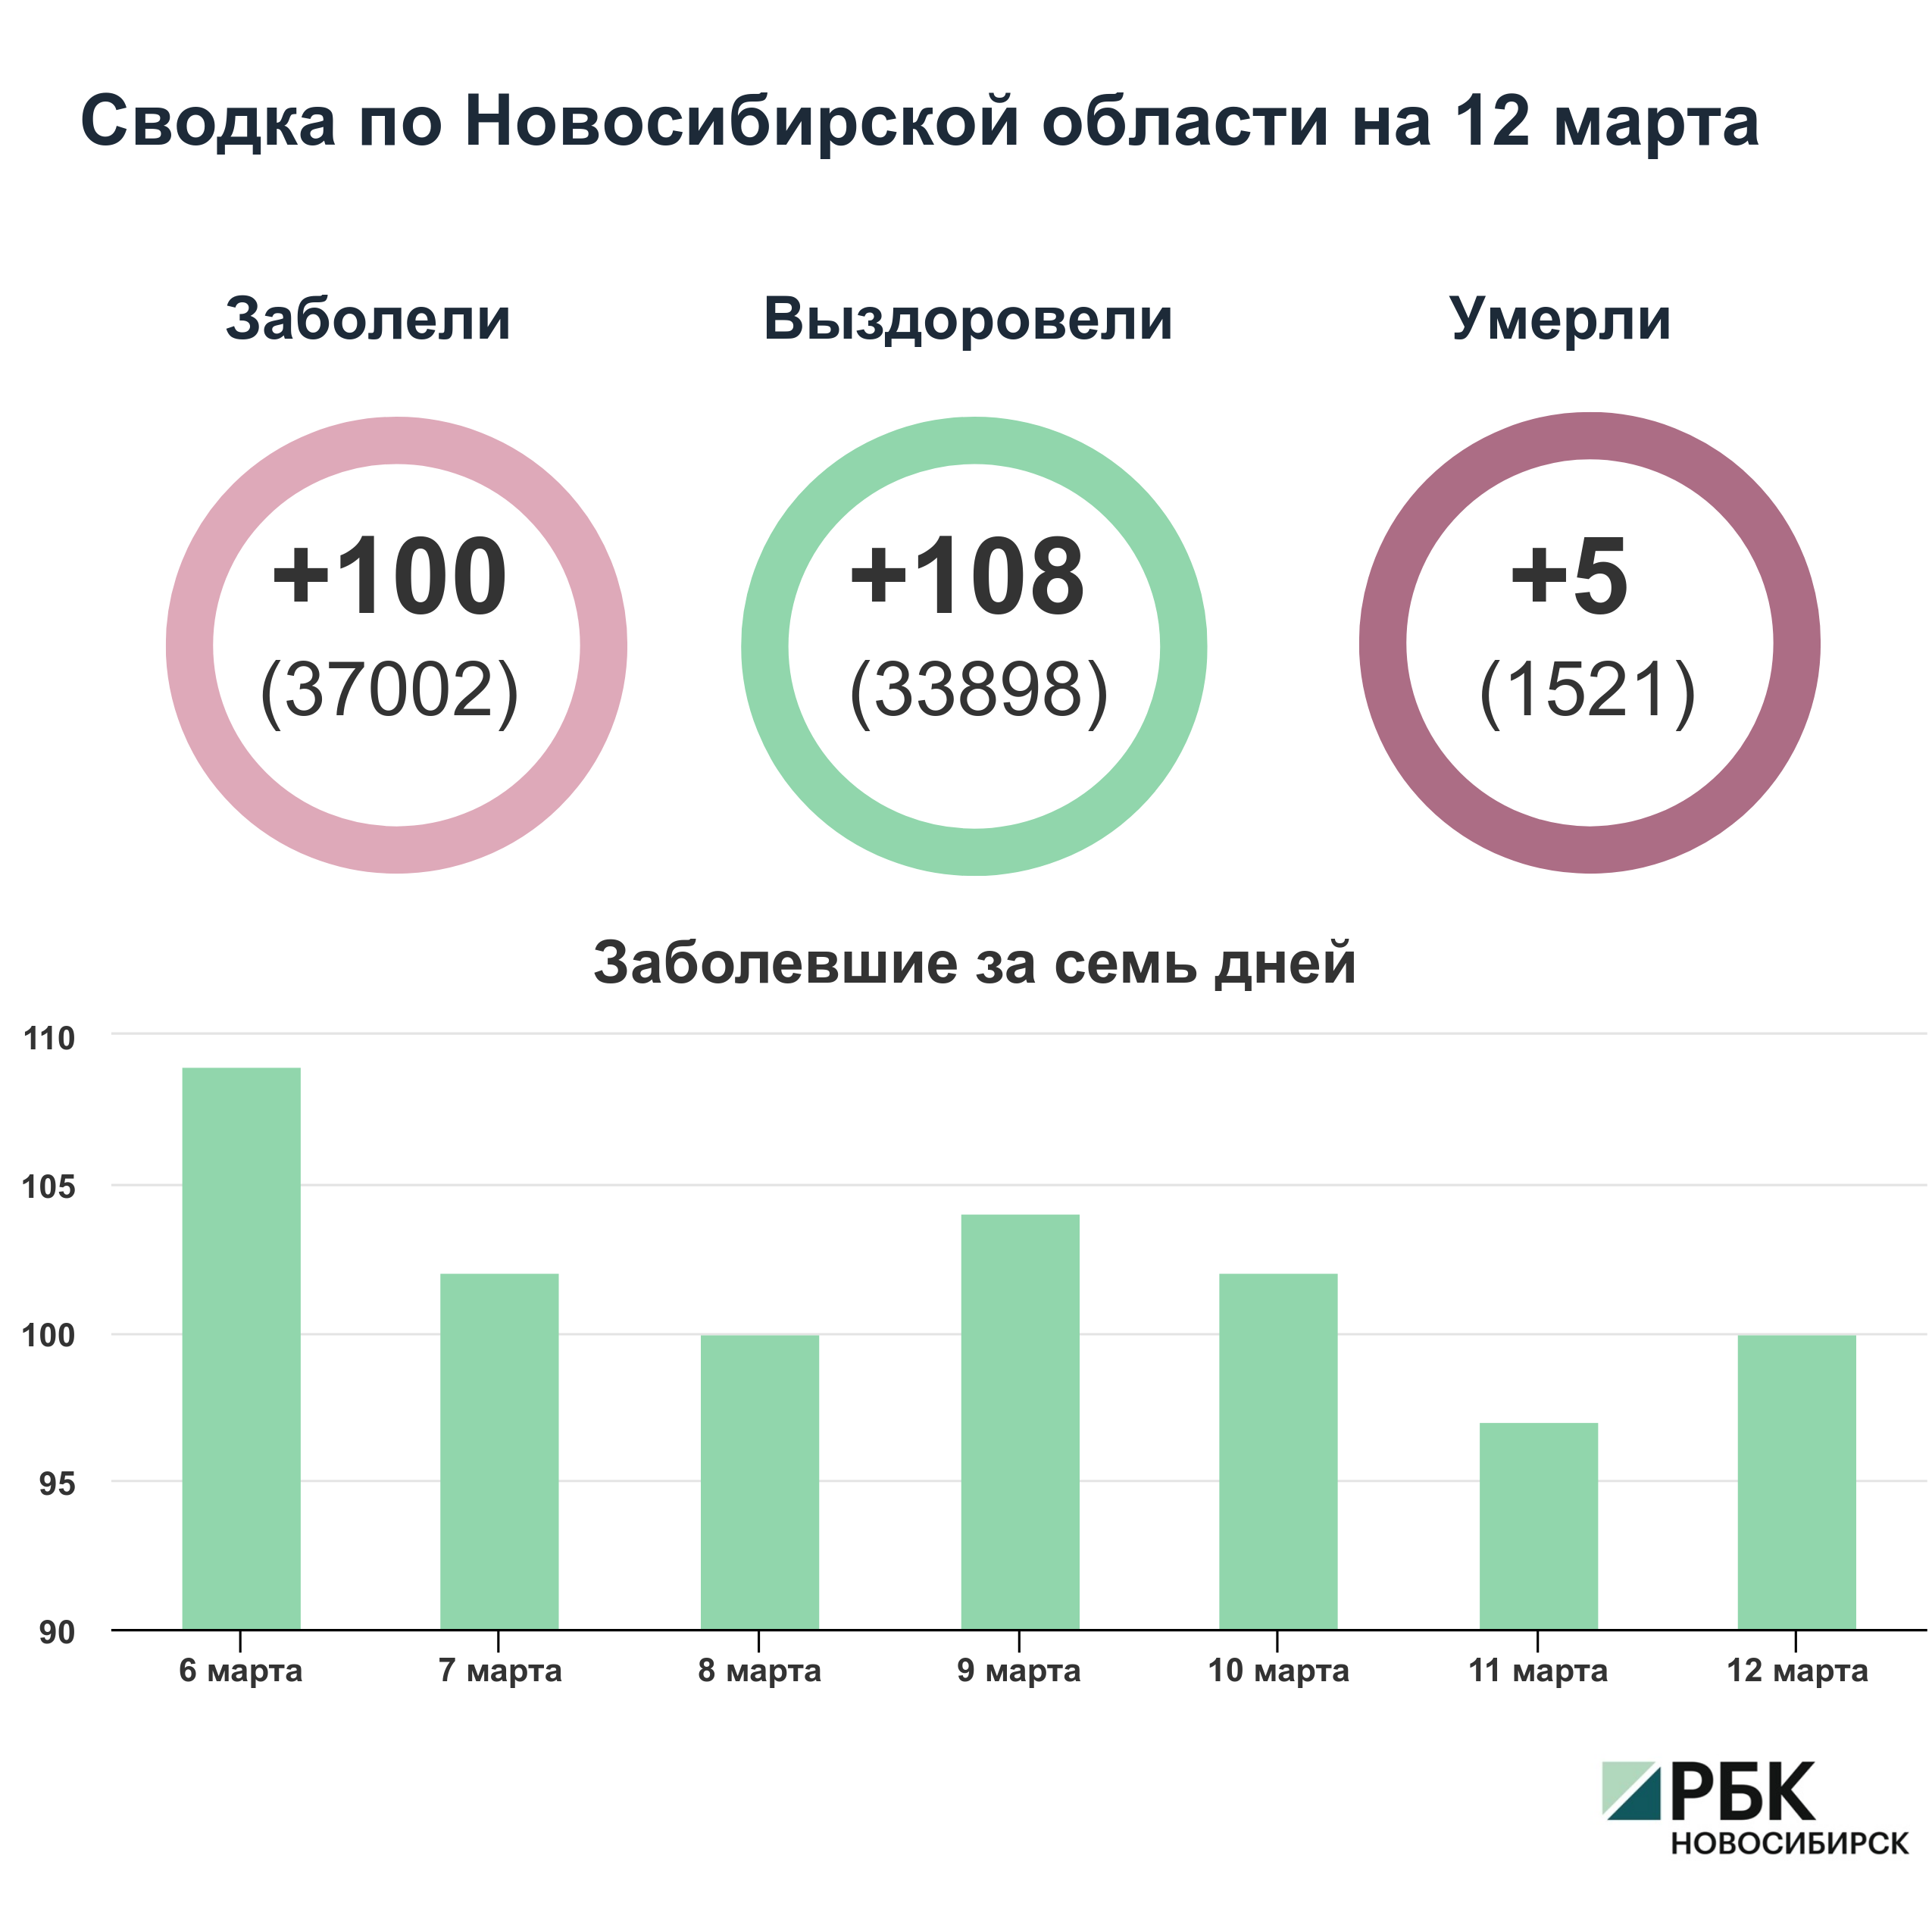 Коронавирус в Новосибирске: сводка на 12 марта